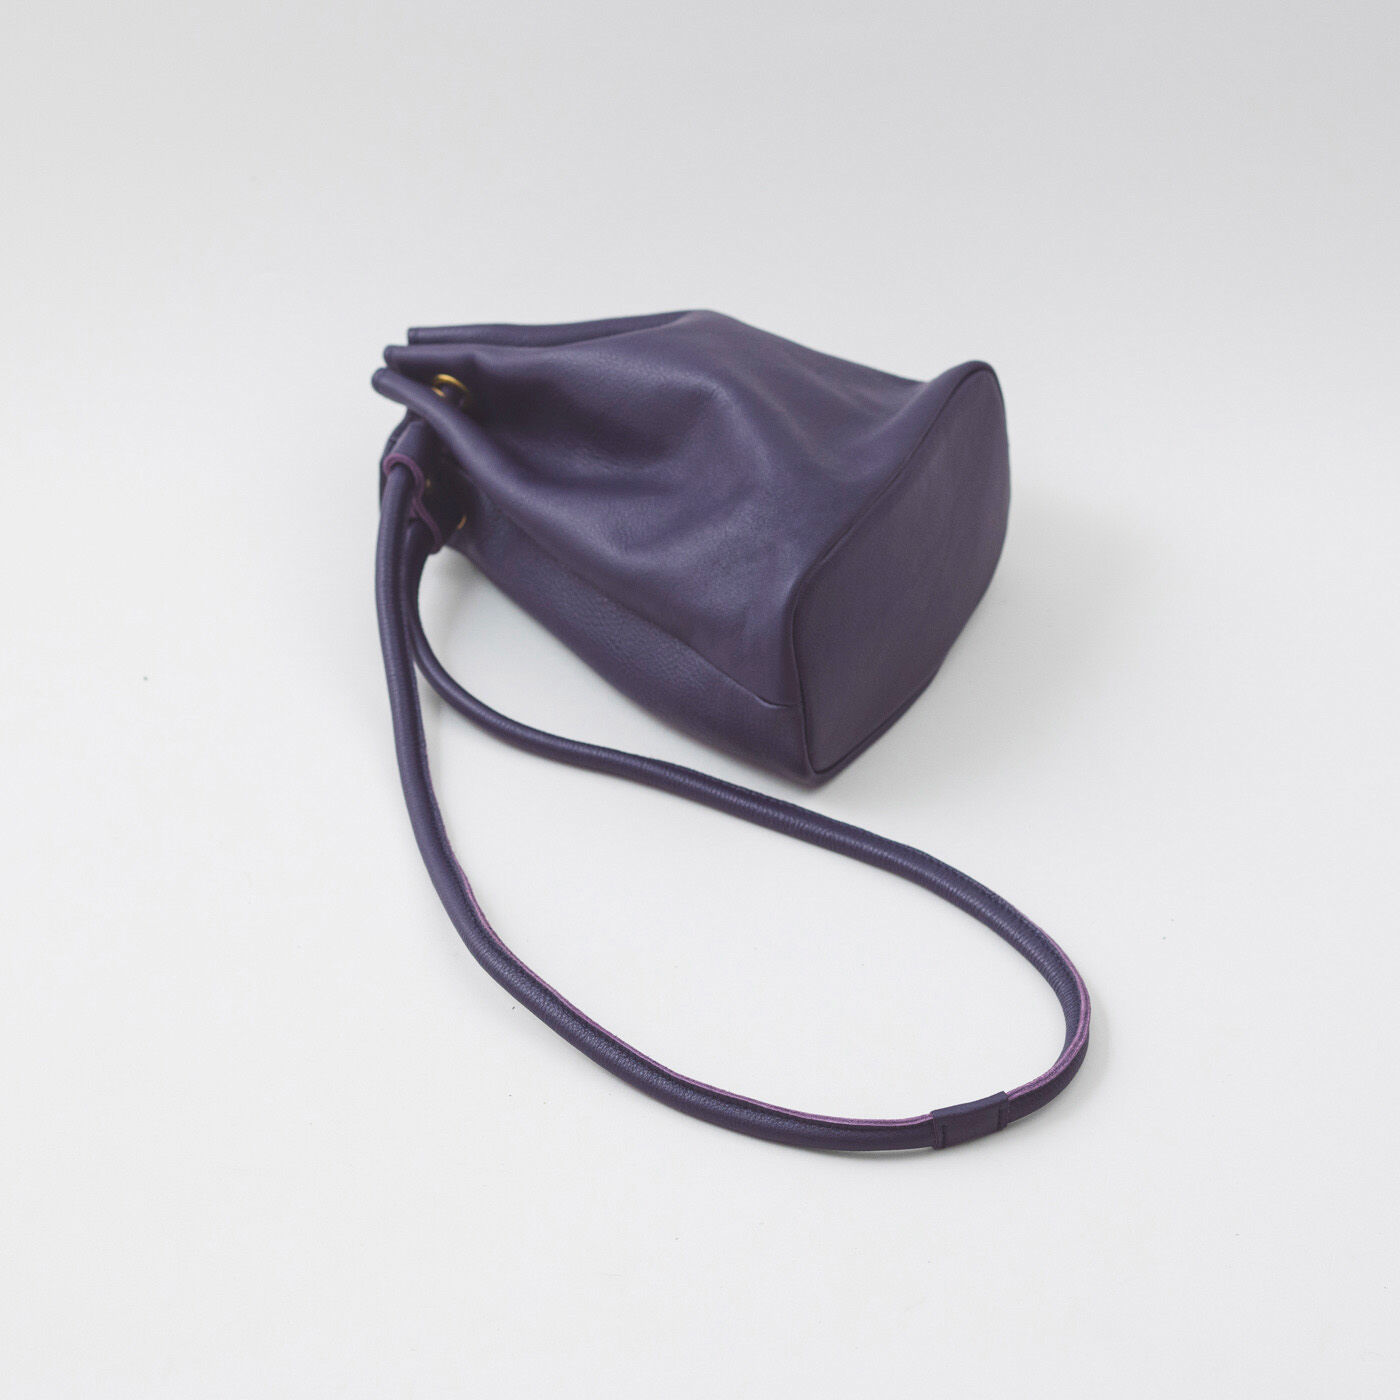 ＆Stories|福岡の鞄作家が作った 職人本革の巾着バッグ〈葡萄色〉|外側のやわらかな本革とコットン素材の裏地で、巾着をキュッと心地よく絞れます。